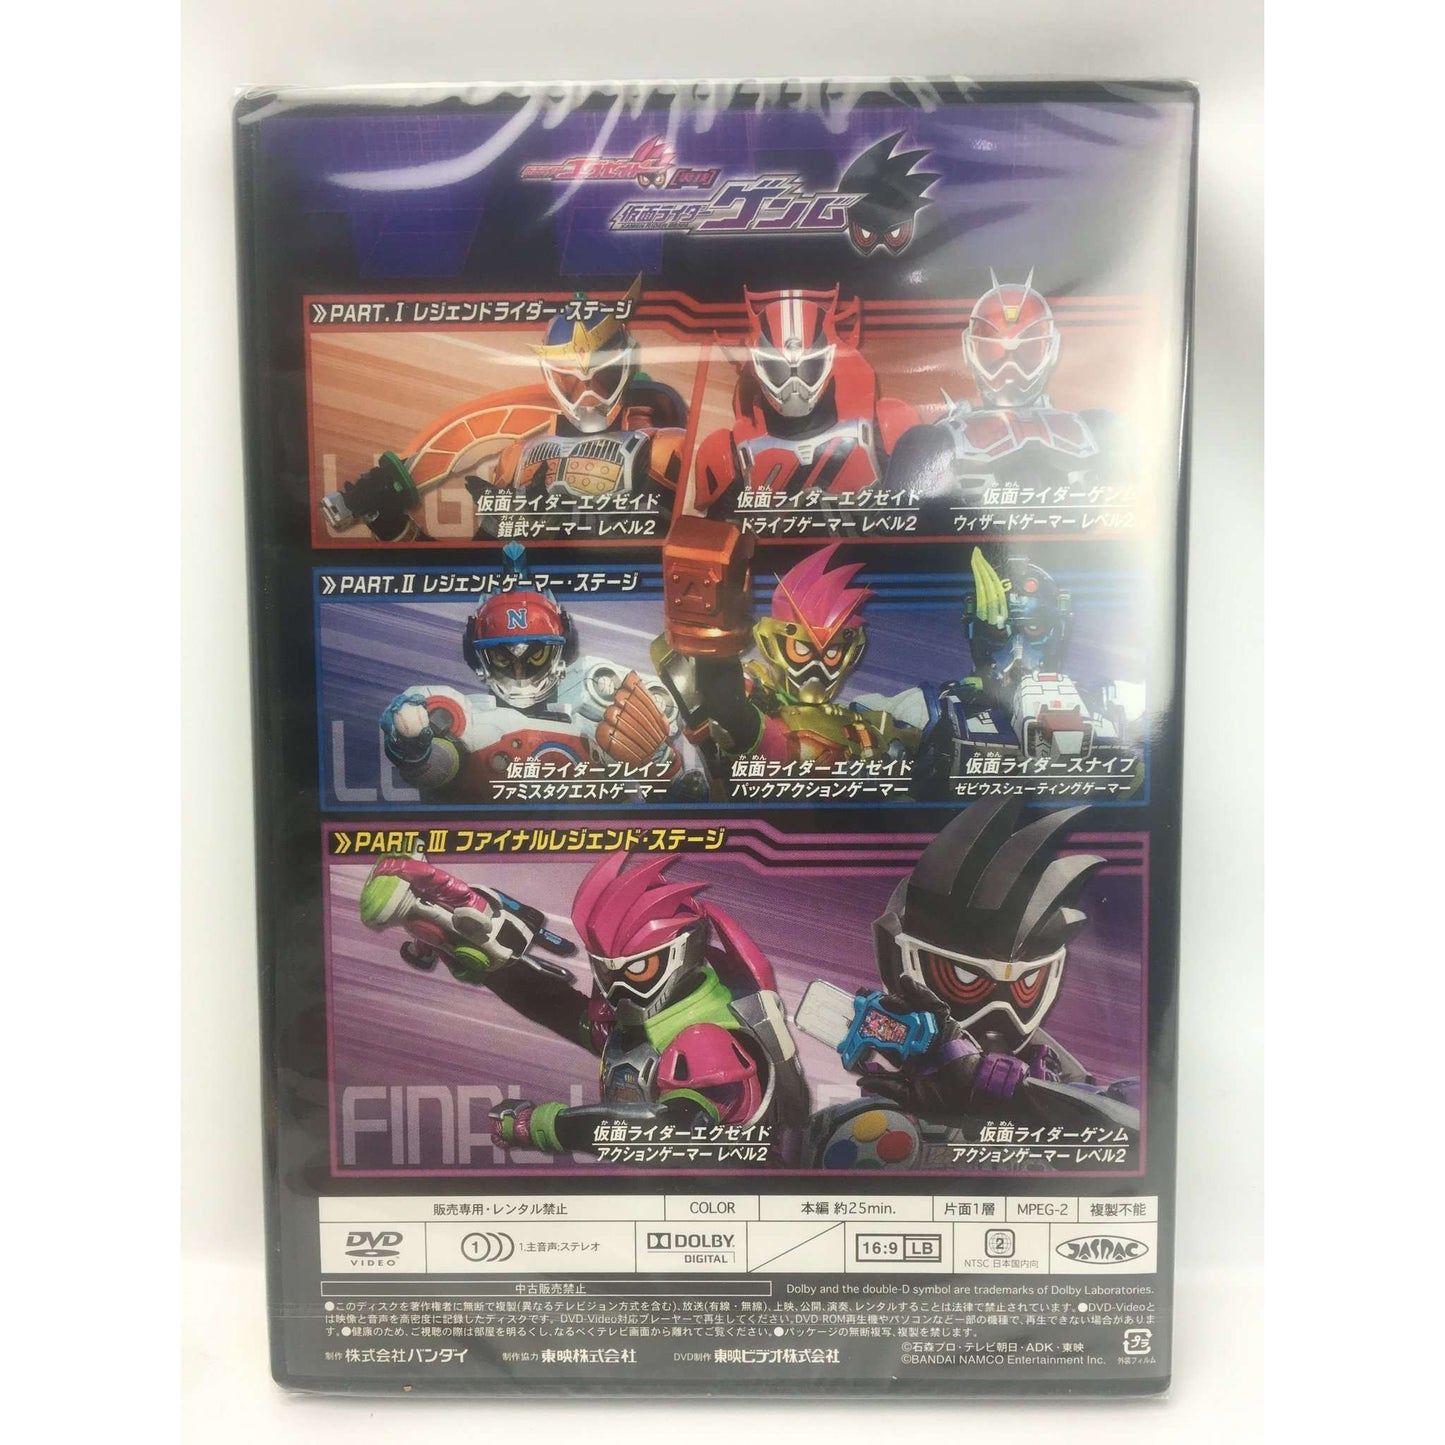 [BOXED] Kamen Rider Ex-Aid - RGS DX Taiko no Tatsujin (Taiko Drum Master) Gashat & Genm DVD Set | CSTOYS INTERNATIONAL